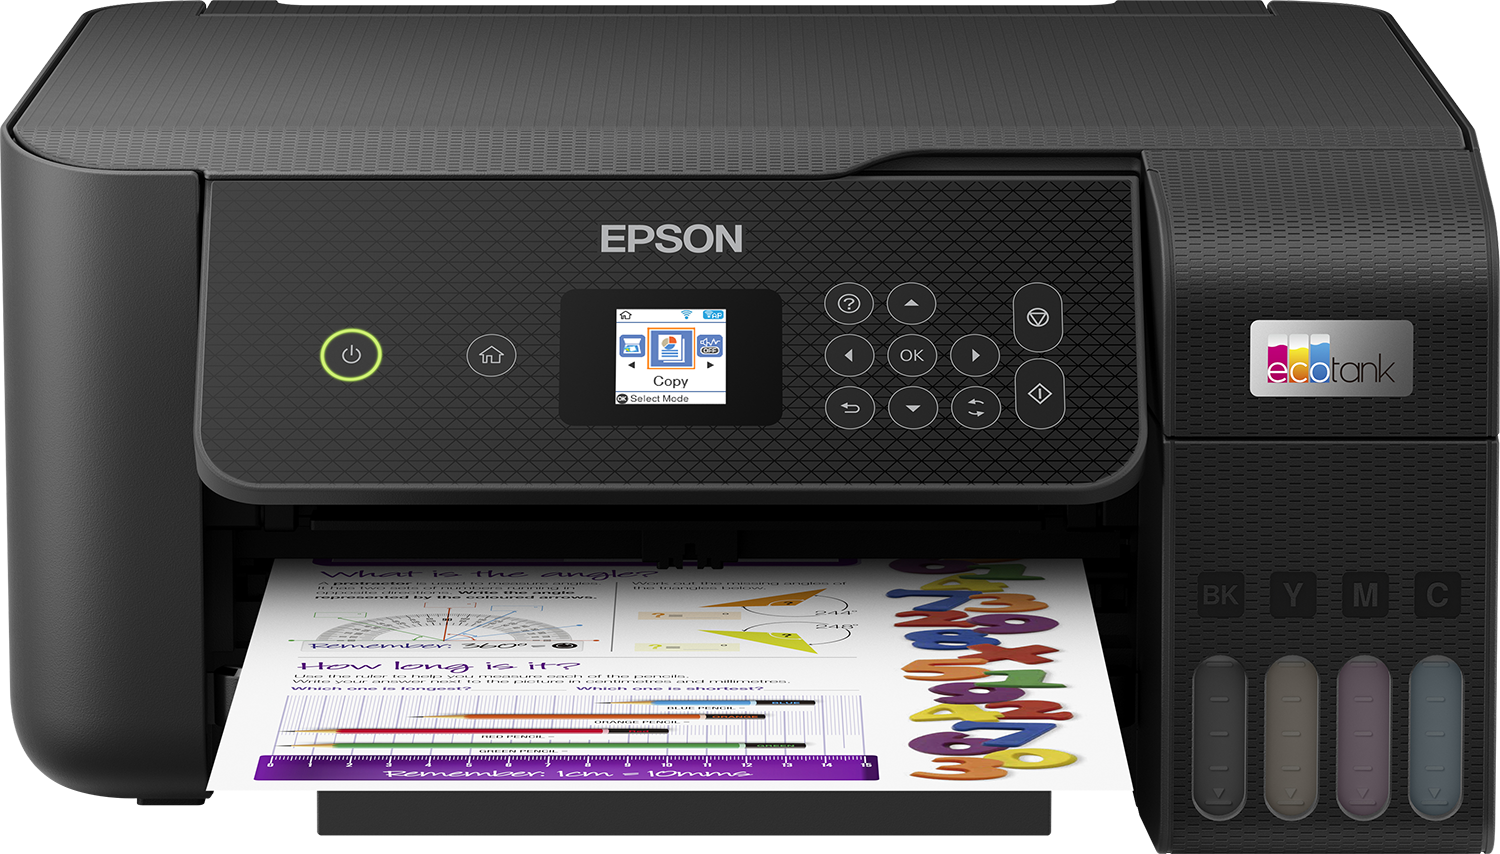 Mejorar descanso James Dyson EcoTank ET-2820 | Consumo | Impresoras de inyección de tinta | Impresoras |  Productos | Epson España